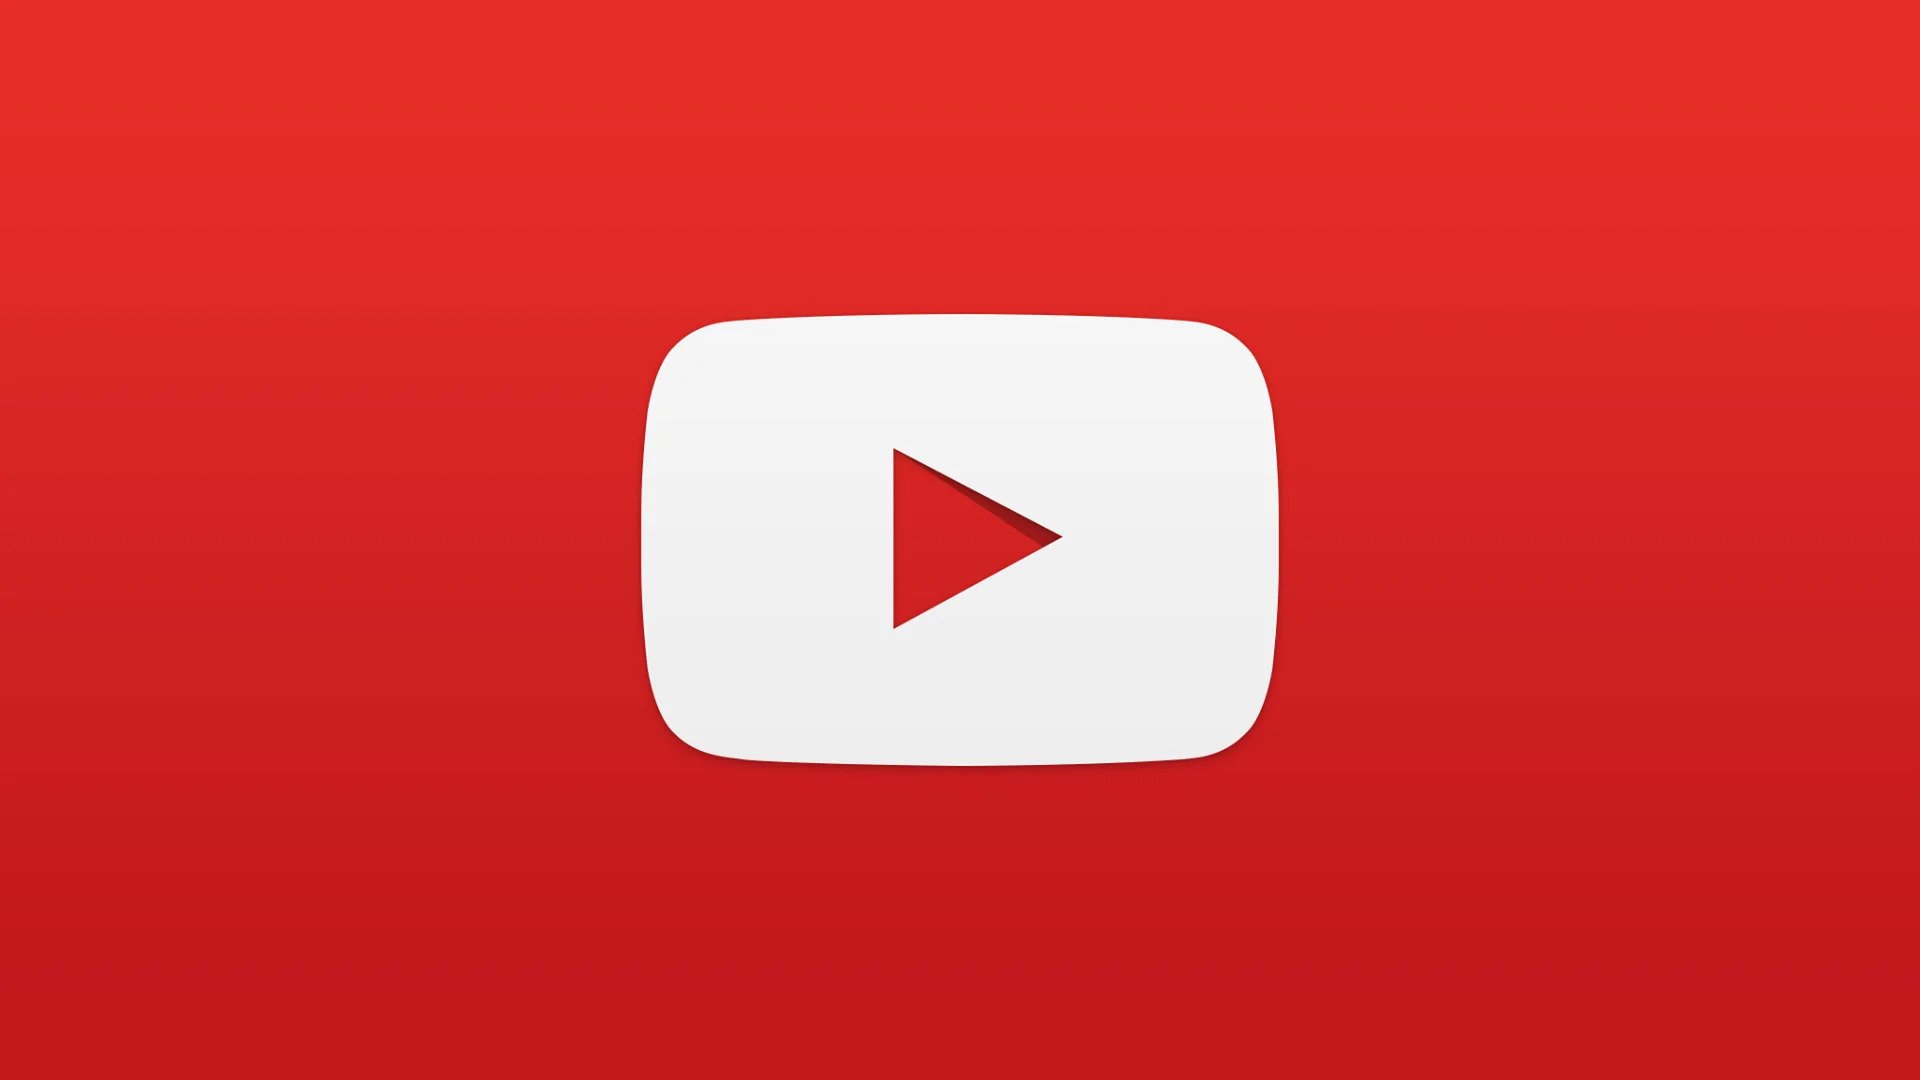 The Youtube Logo